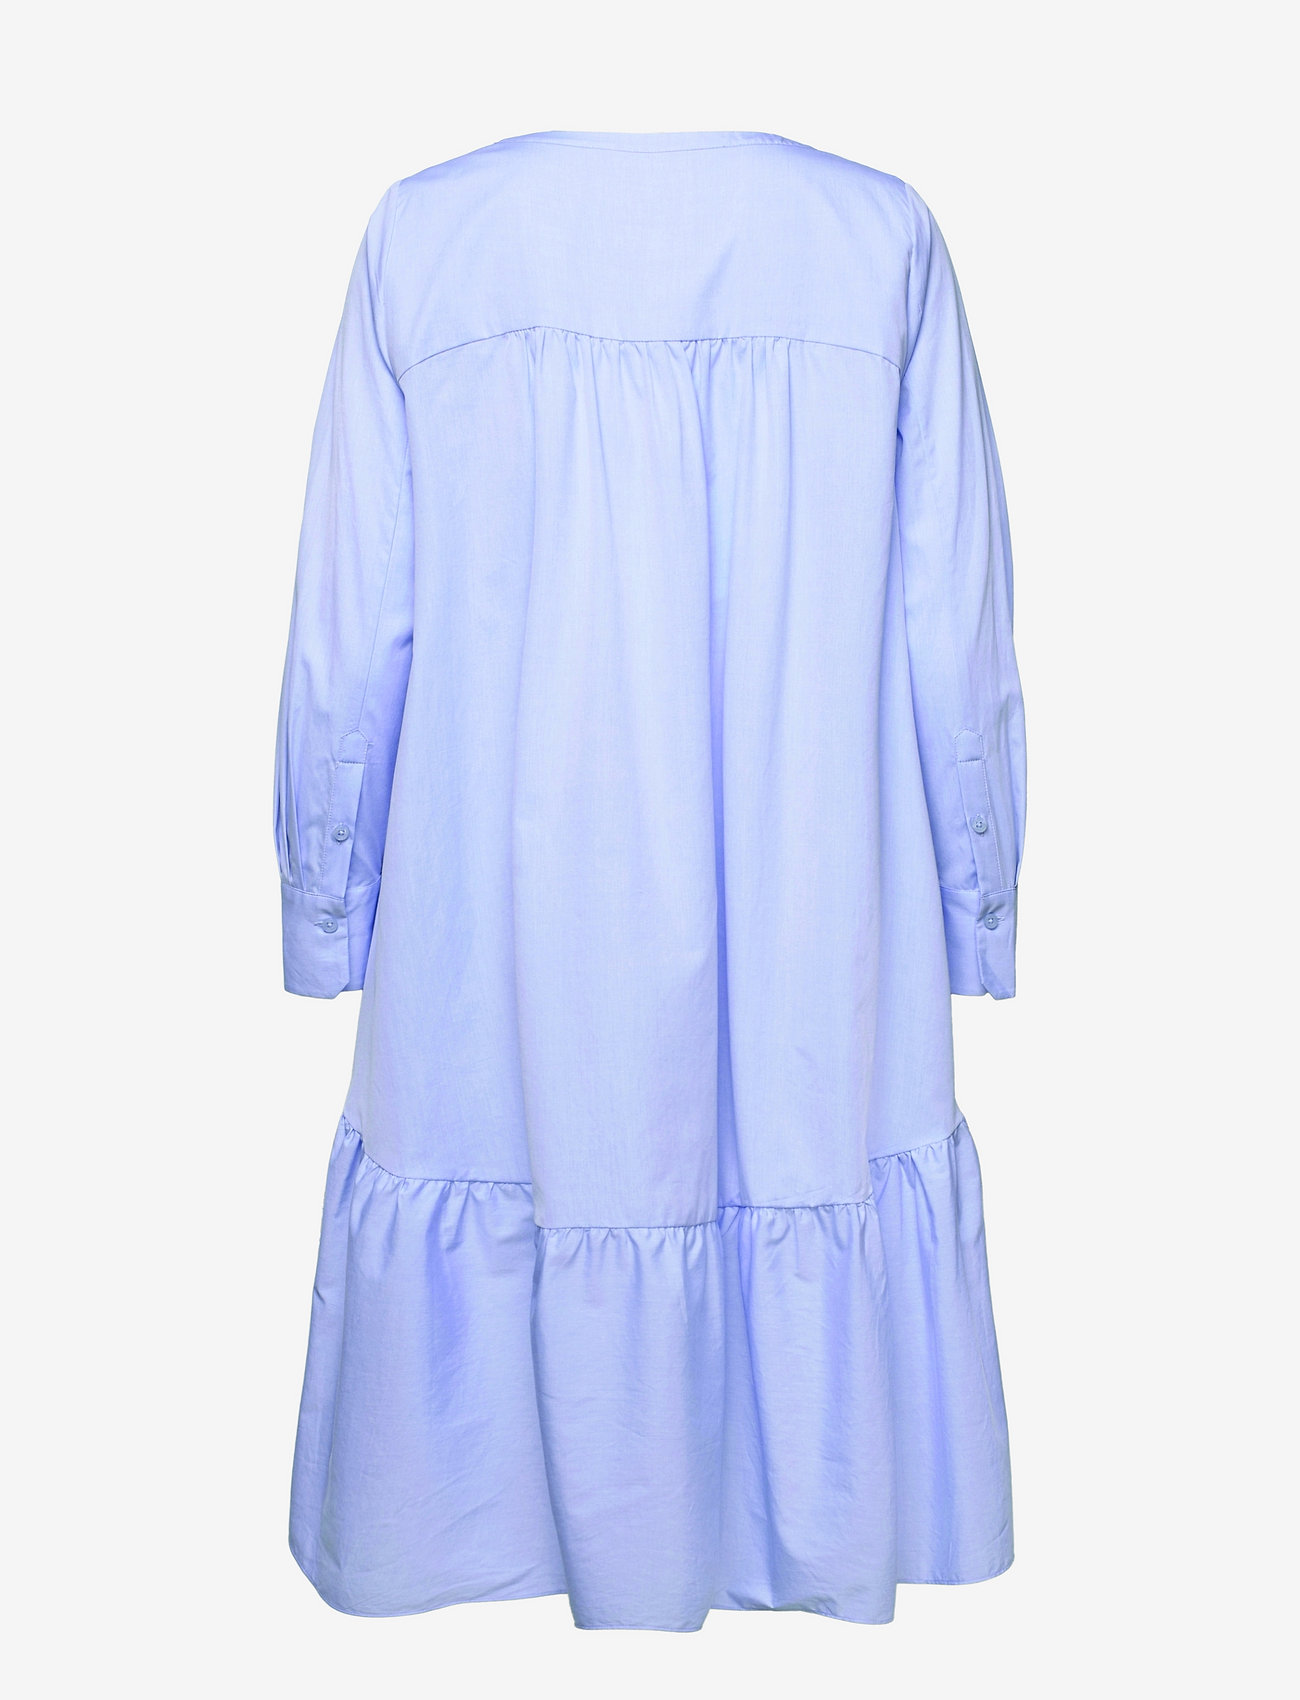 Second Female - Heaven LS Midi Dress - midiklänningar - brunnera blue - 1